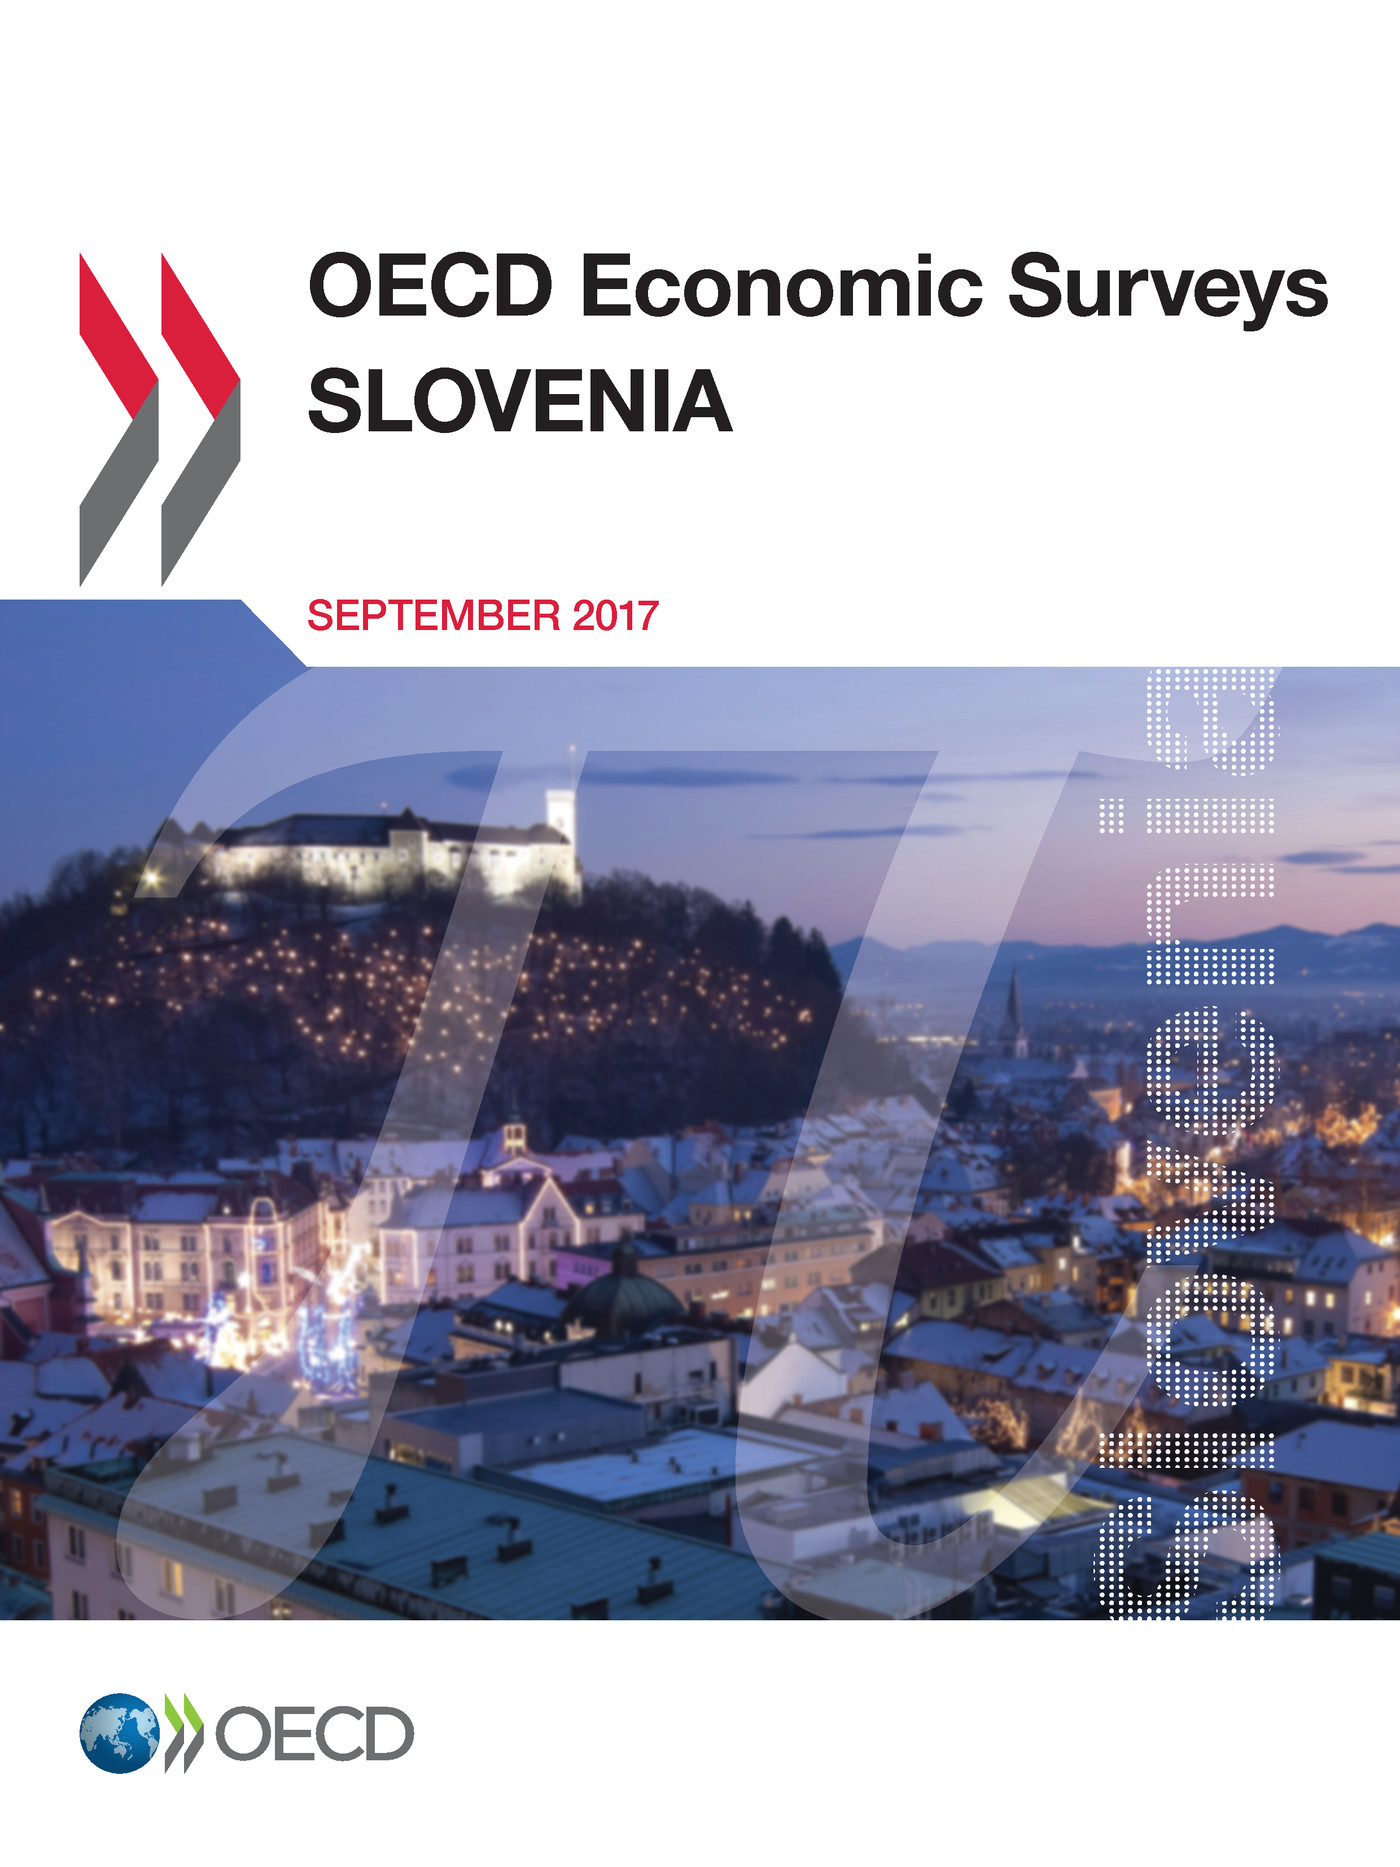 OECD Economic Surveys: Slovenia 2017 -  Collectif - OCDE / OECD